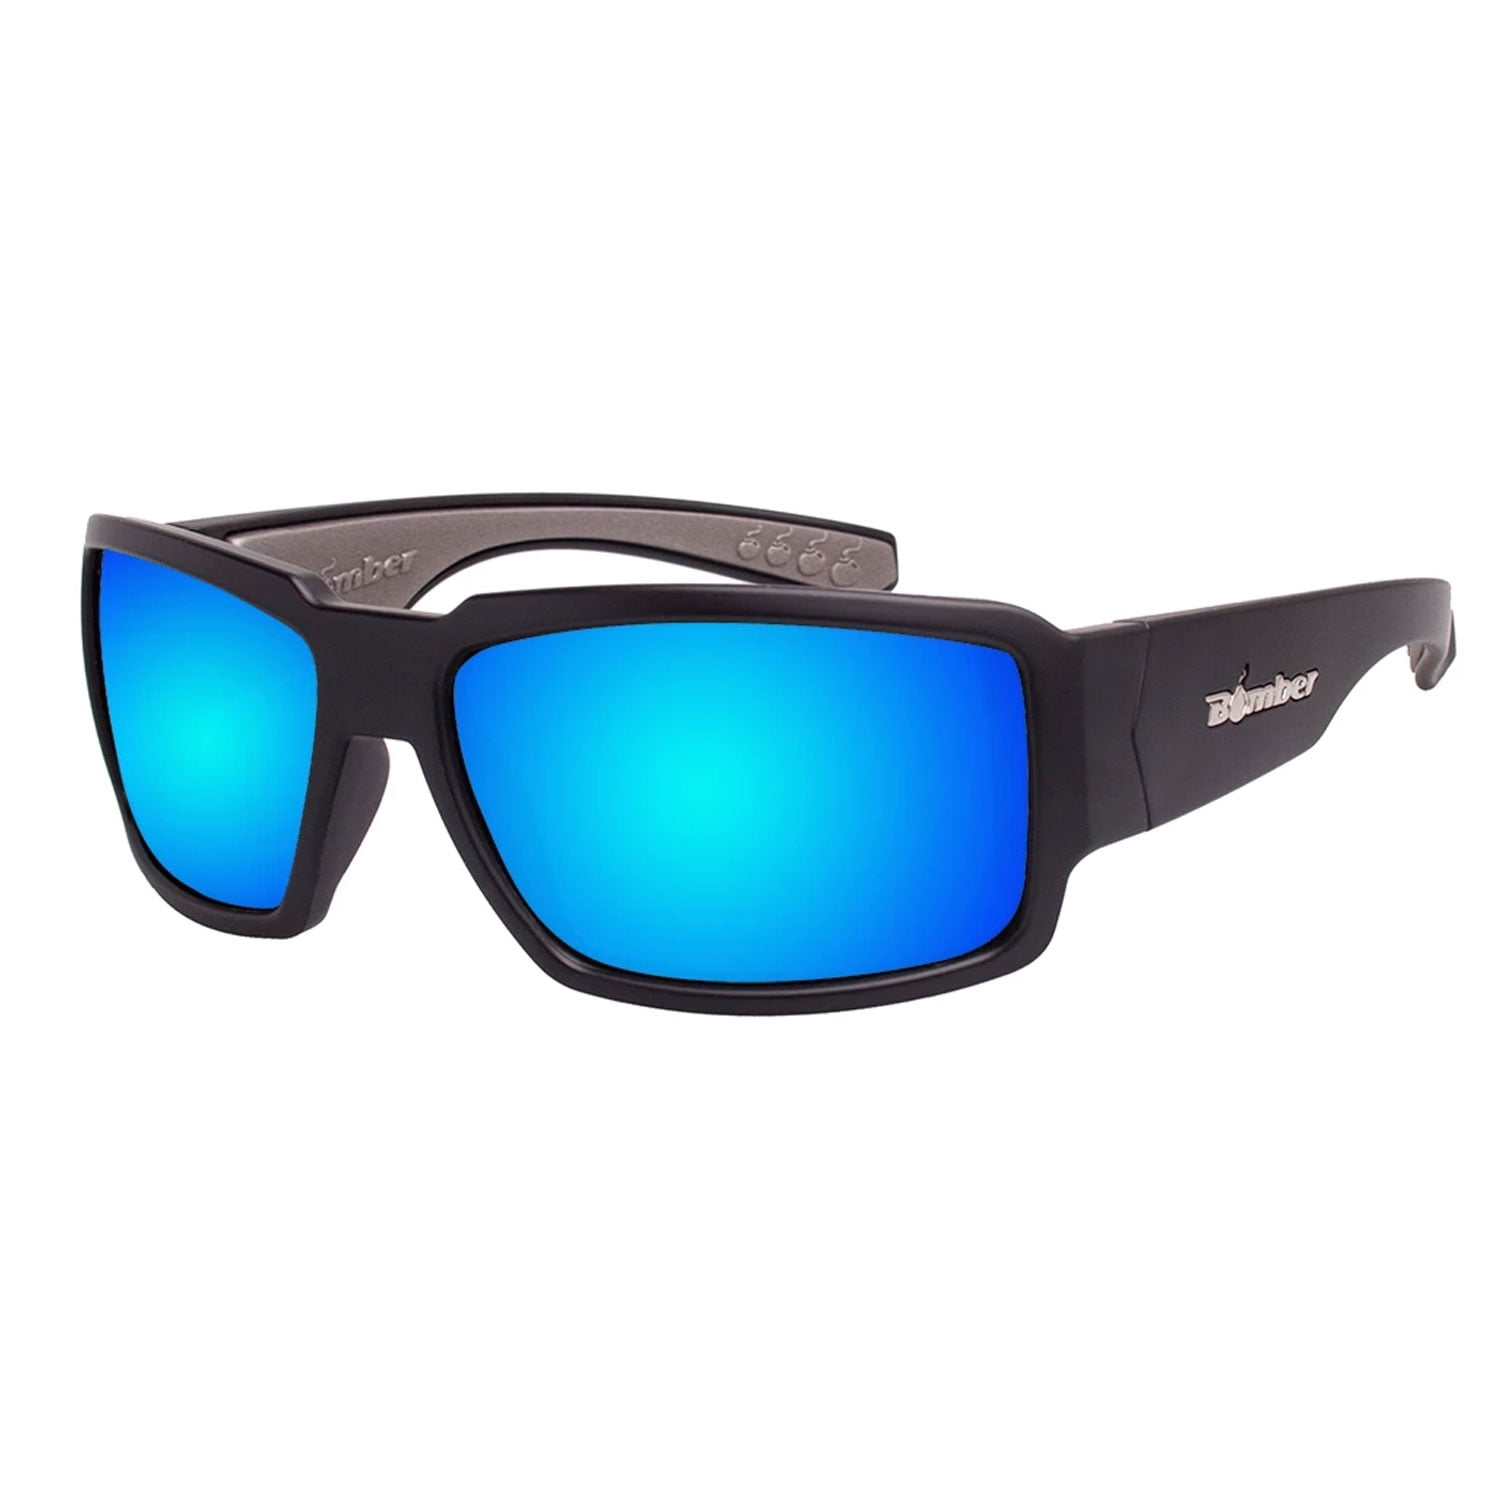 Bomber Sunglasses Boogie Bomb Matte Black Frm / Ice Blue Mirror ANSI ...